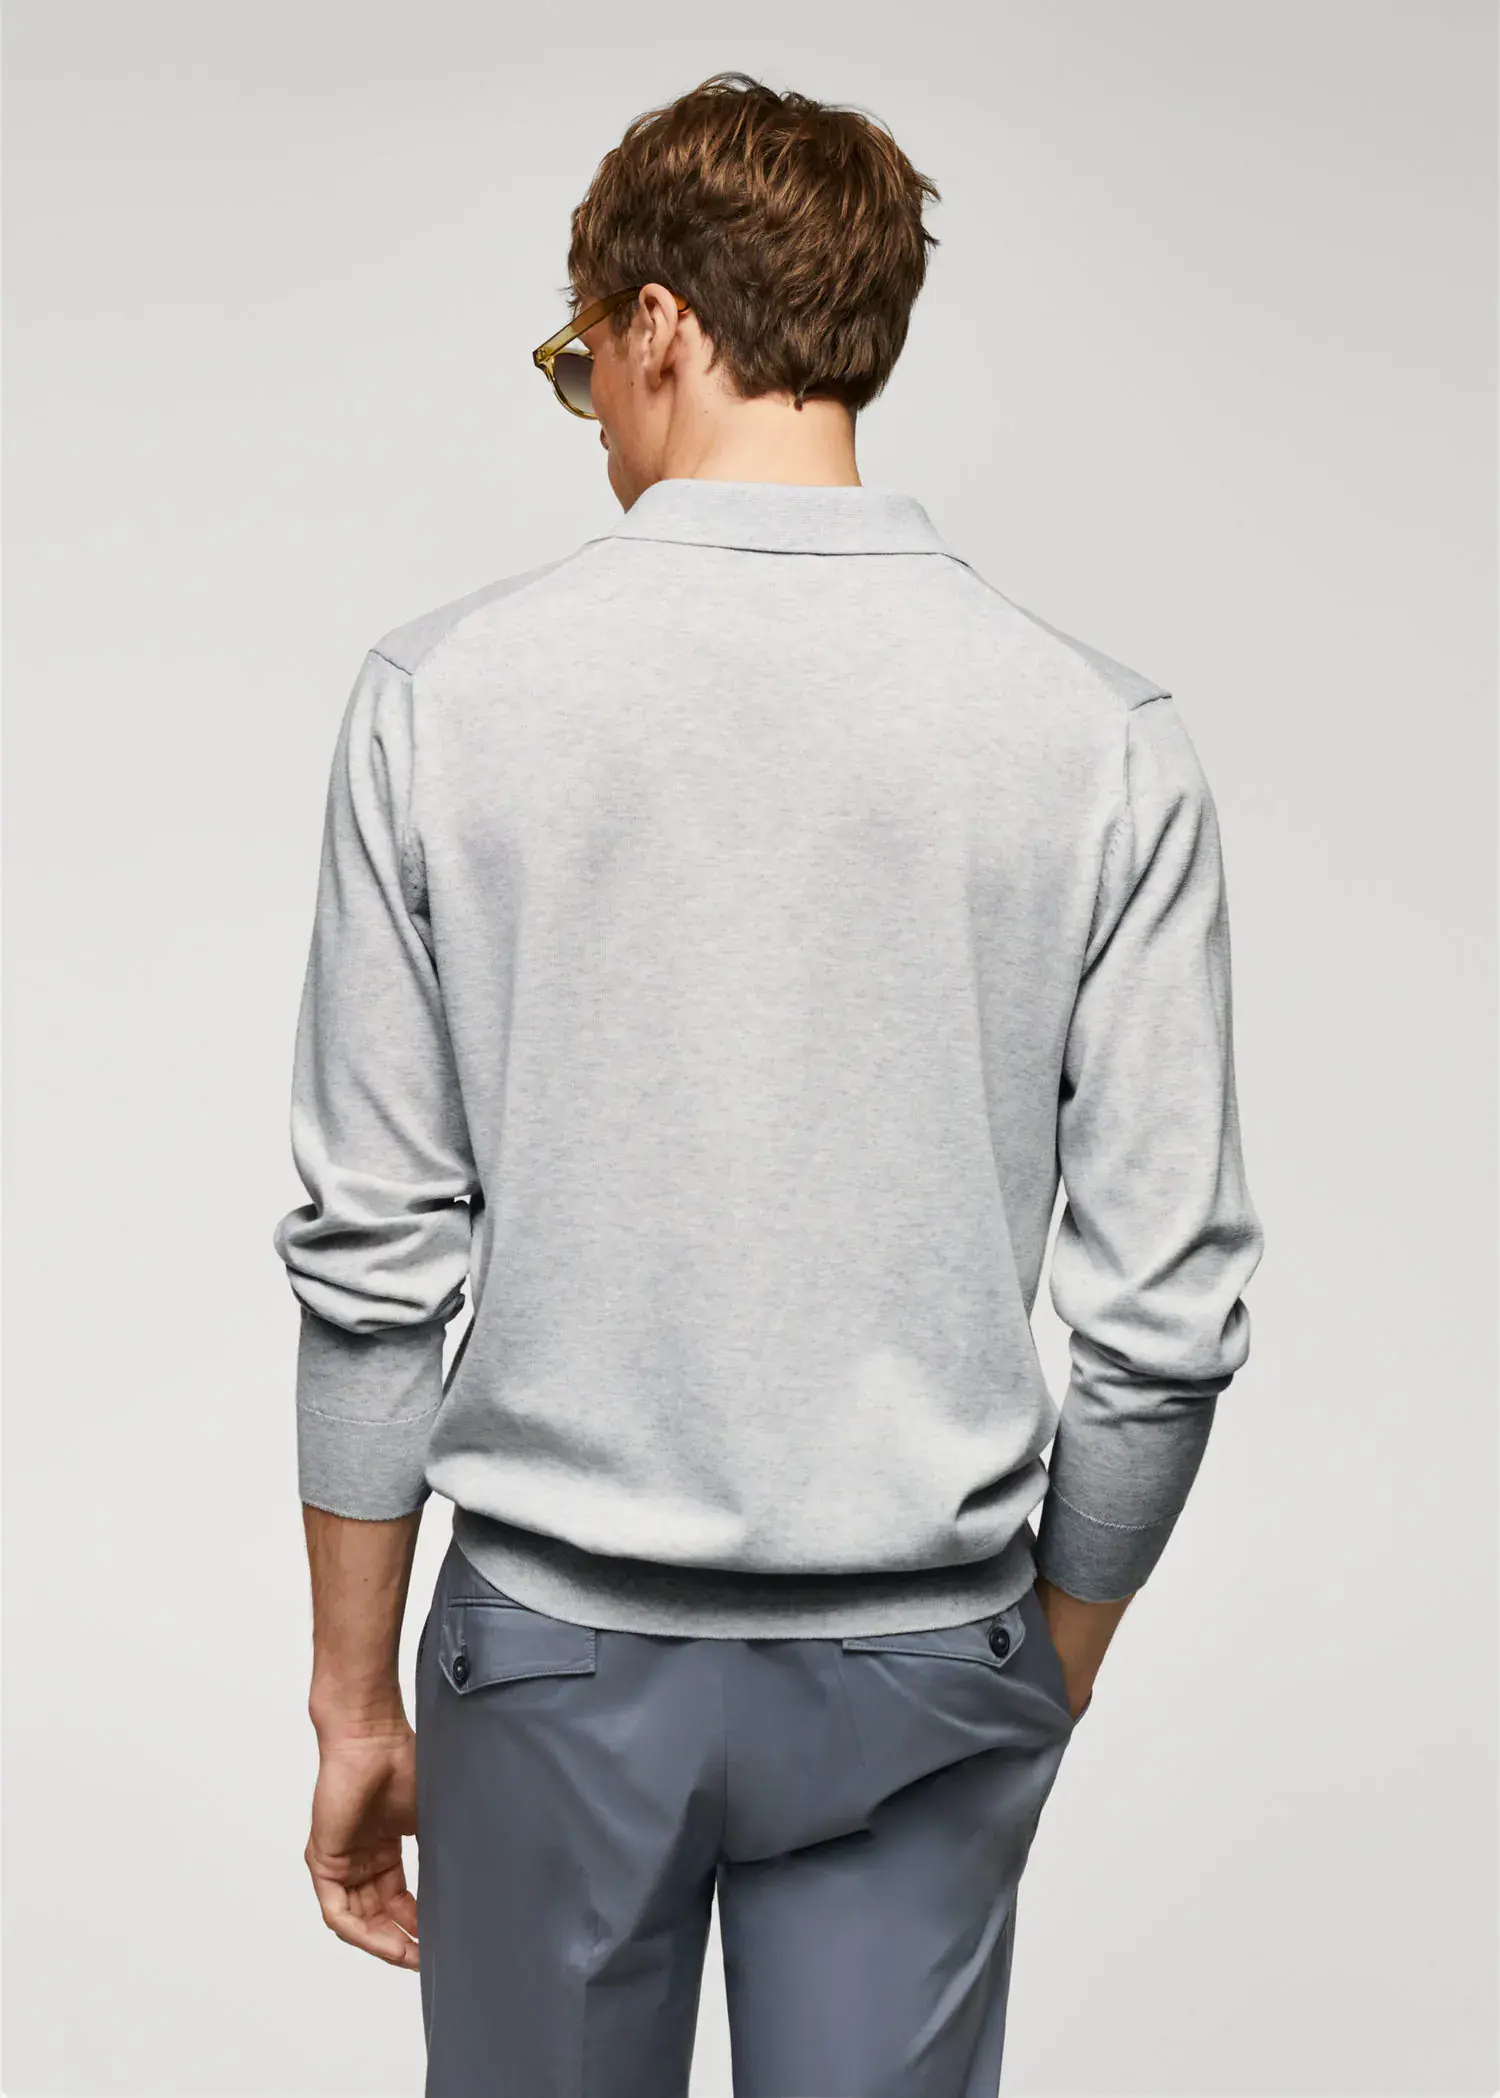 Mango Long-sleeved cotton jersey polo shirt. a man wearing a light gray sweater and sunglasses. 